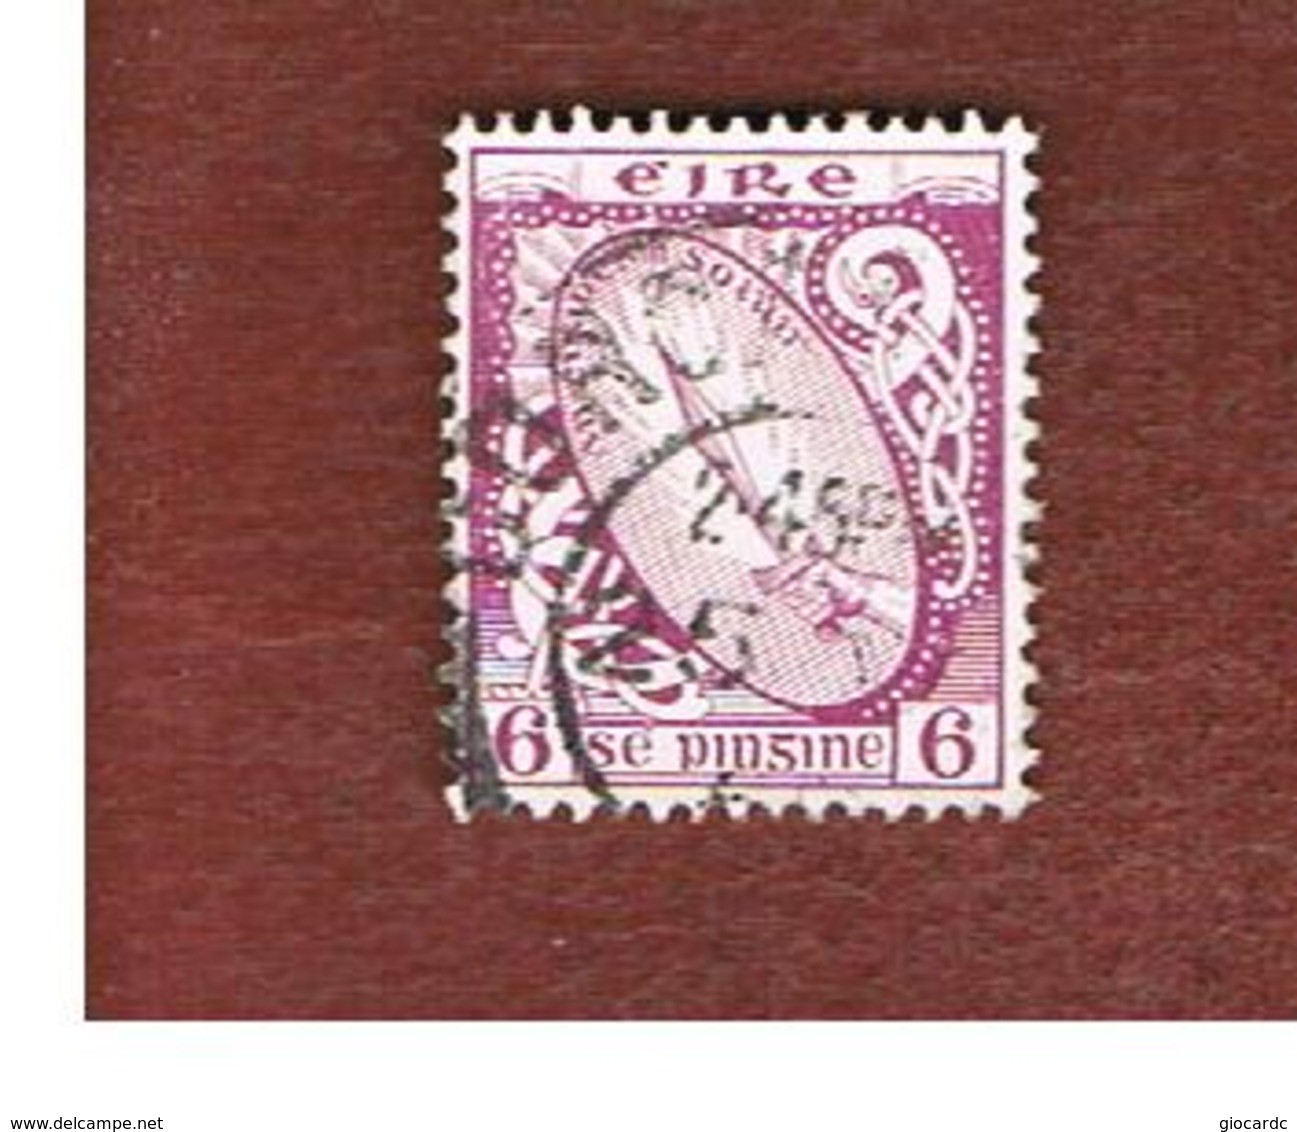 IRLANDA (IRELAND) -  SG 119b  -  1940  SWORD OF LIGHT 6  - USED - Used Stamps